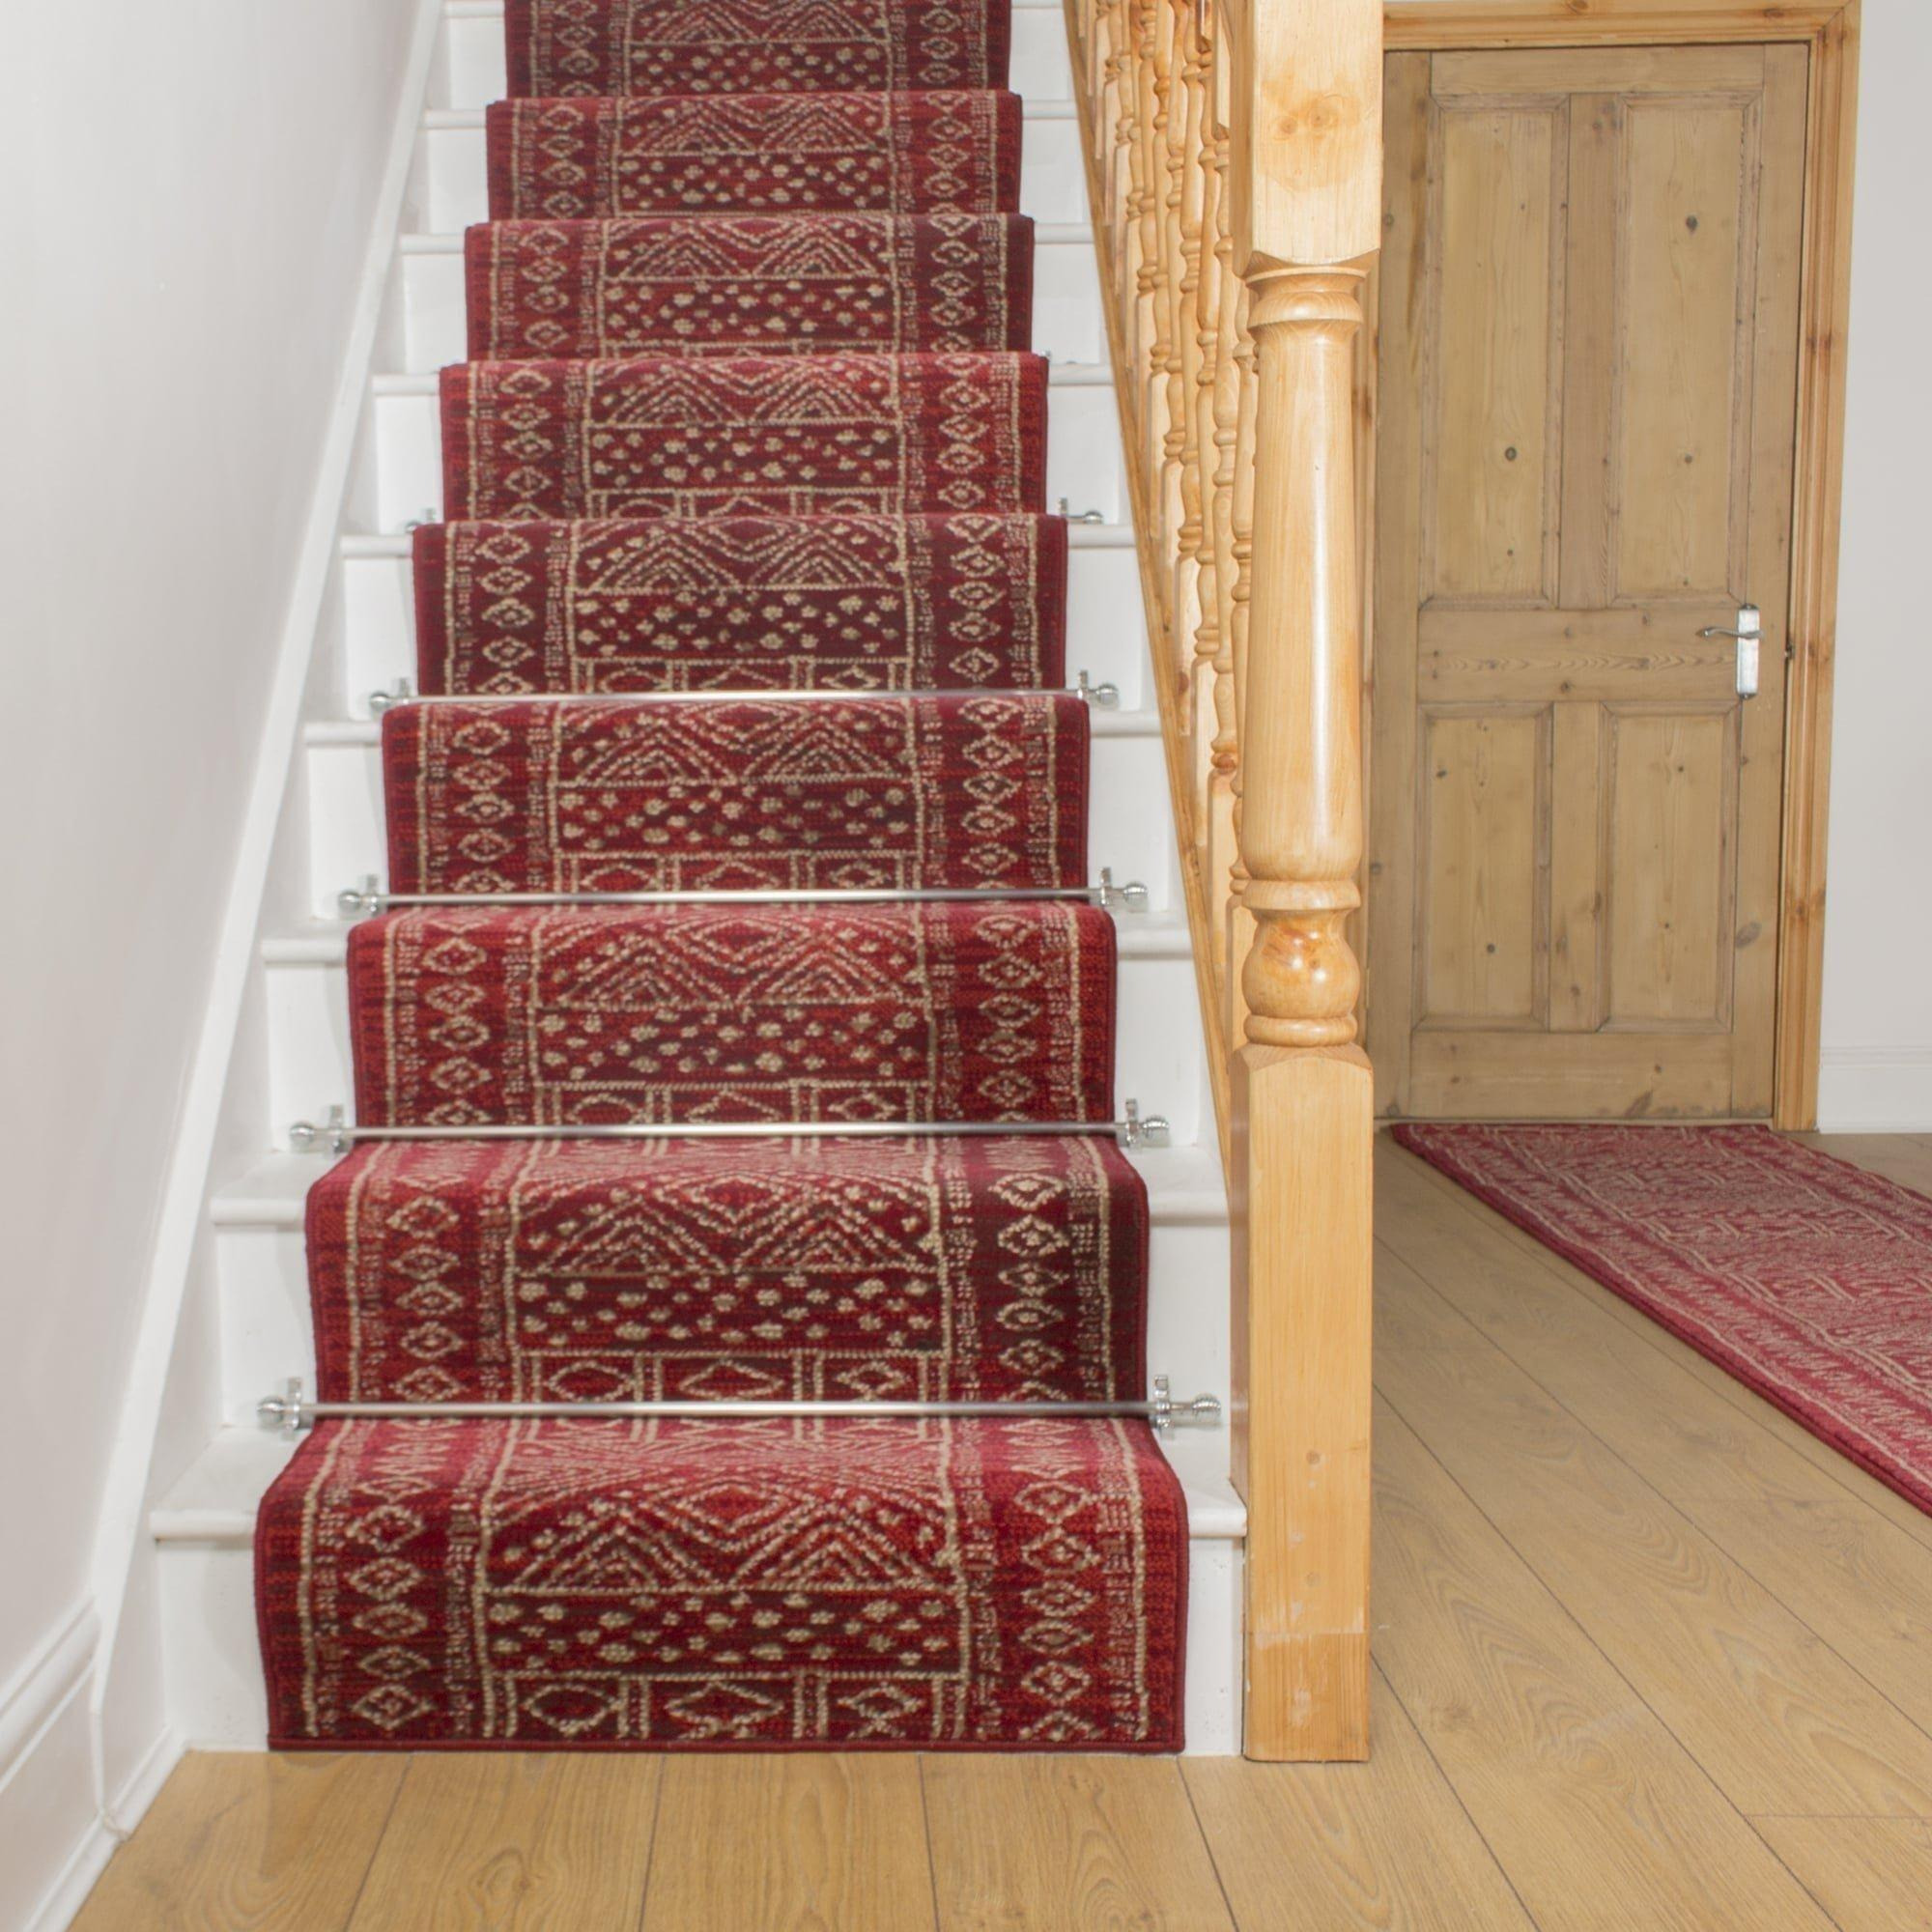 Red Afrikans Stair Carpet Runner - image 1